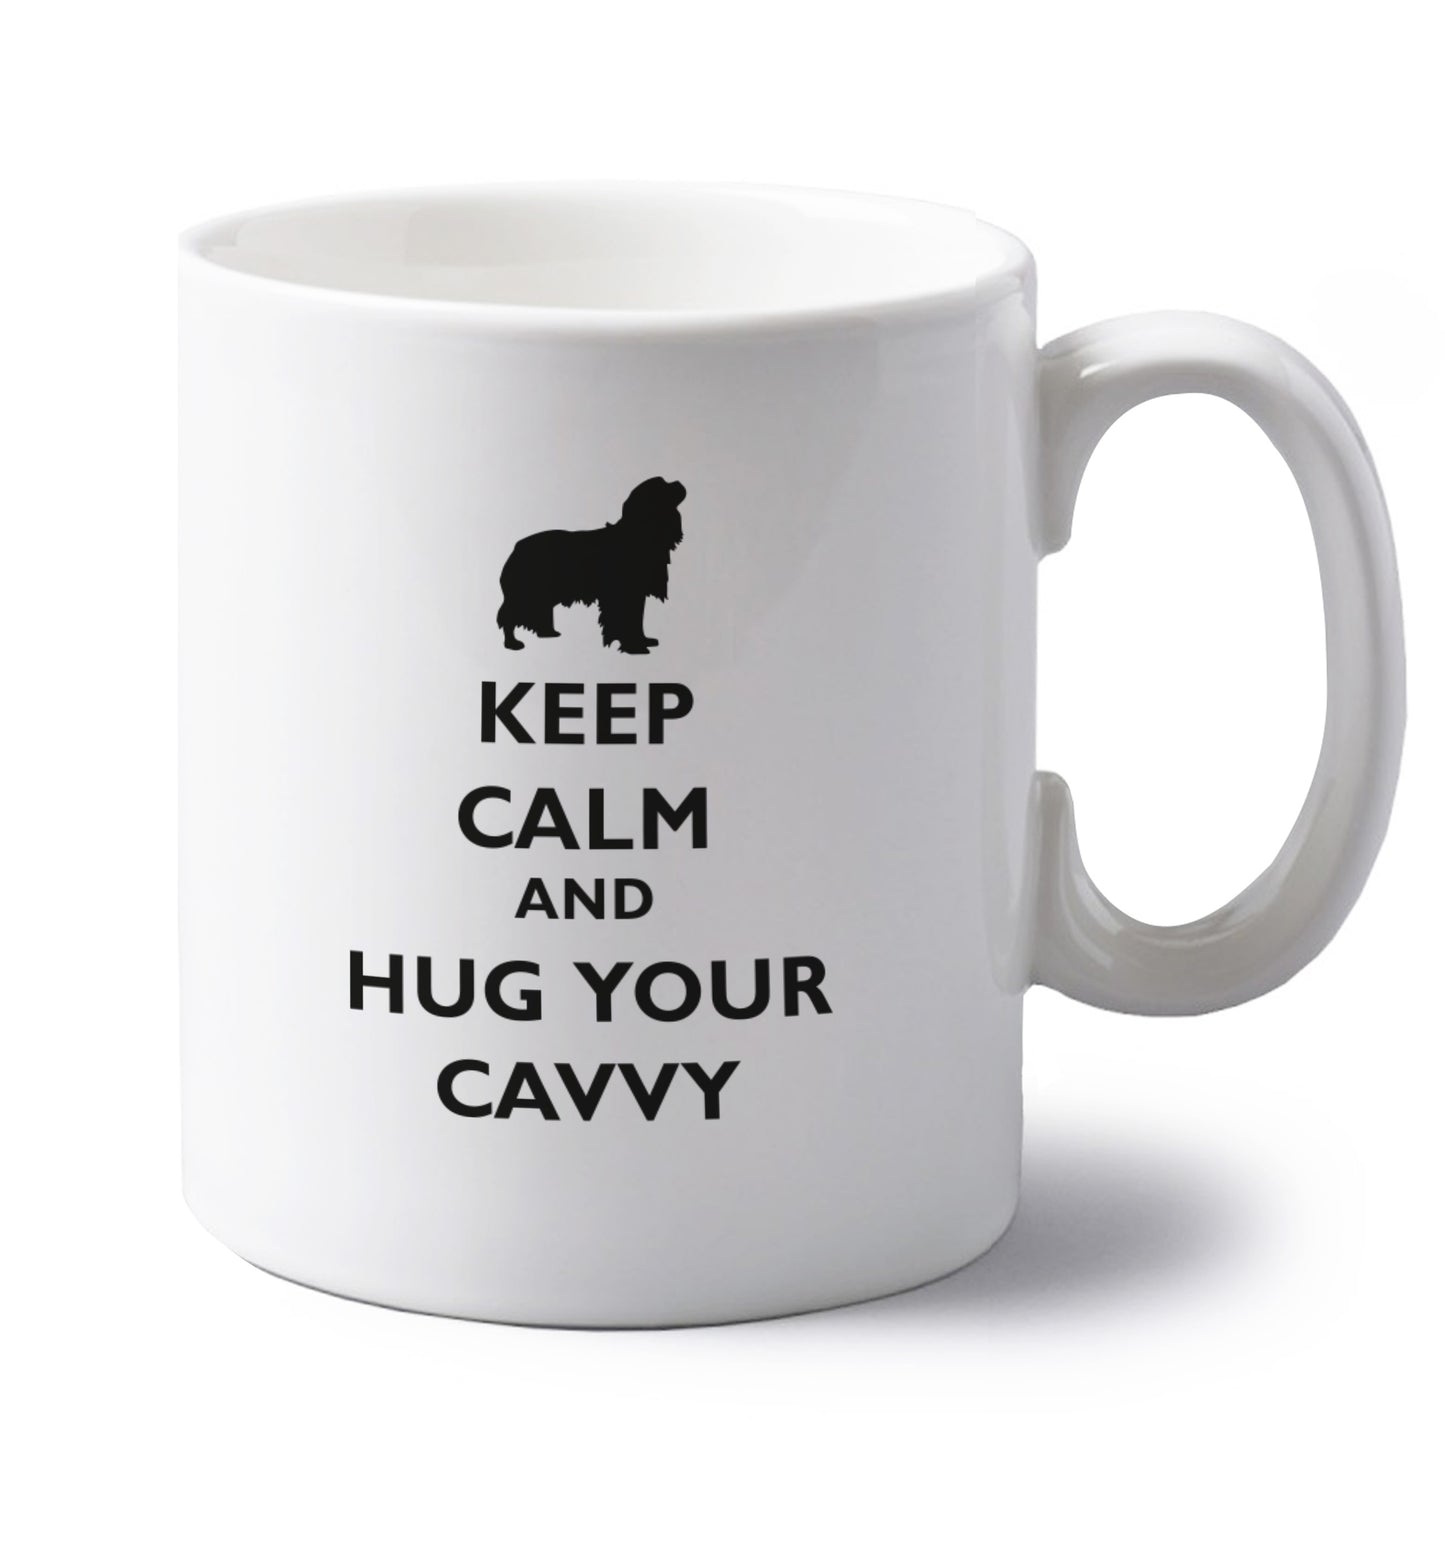 Keep calm and hug your cavvy left handed white ceramic mug 